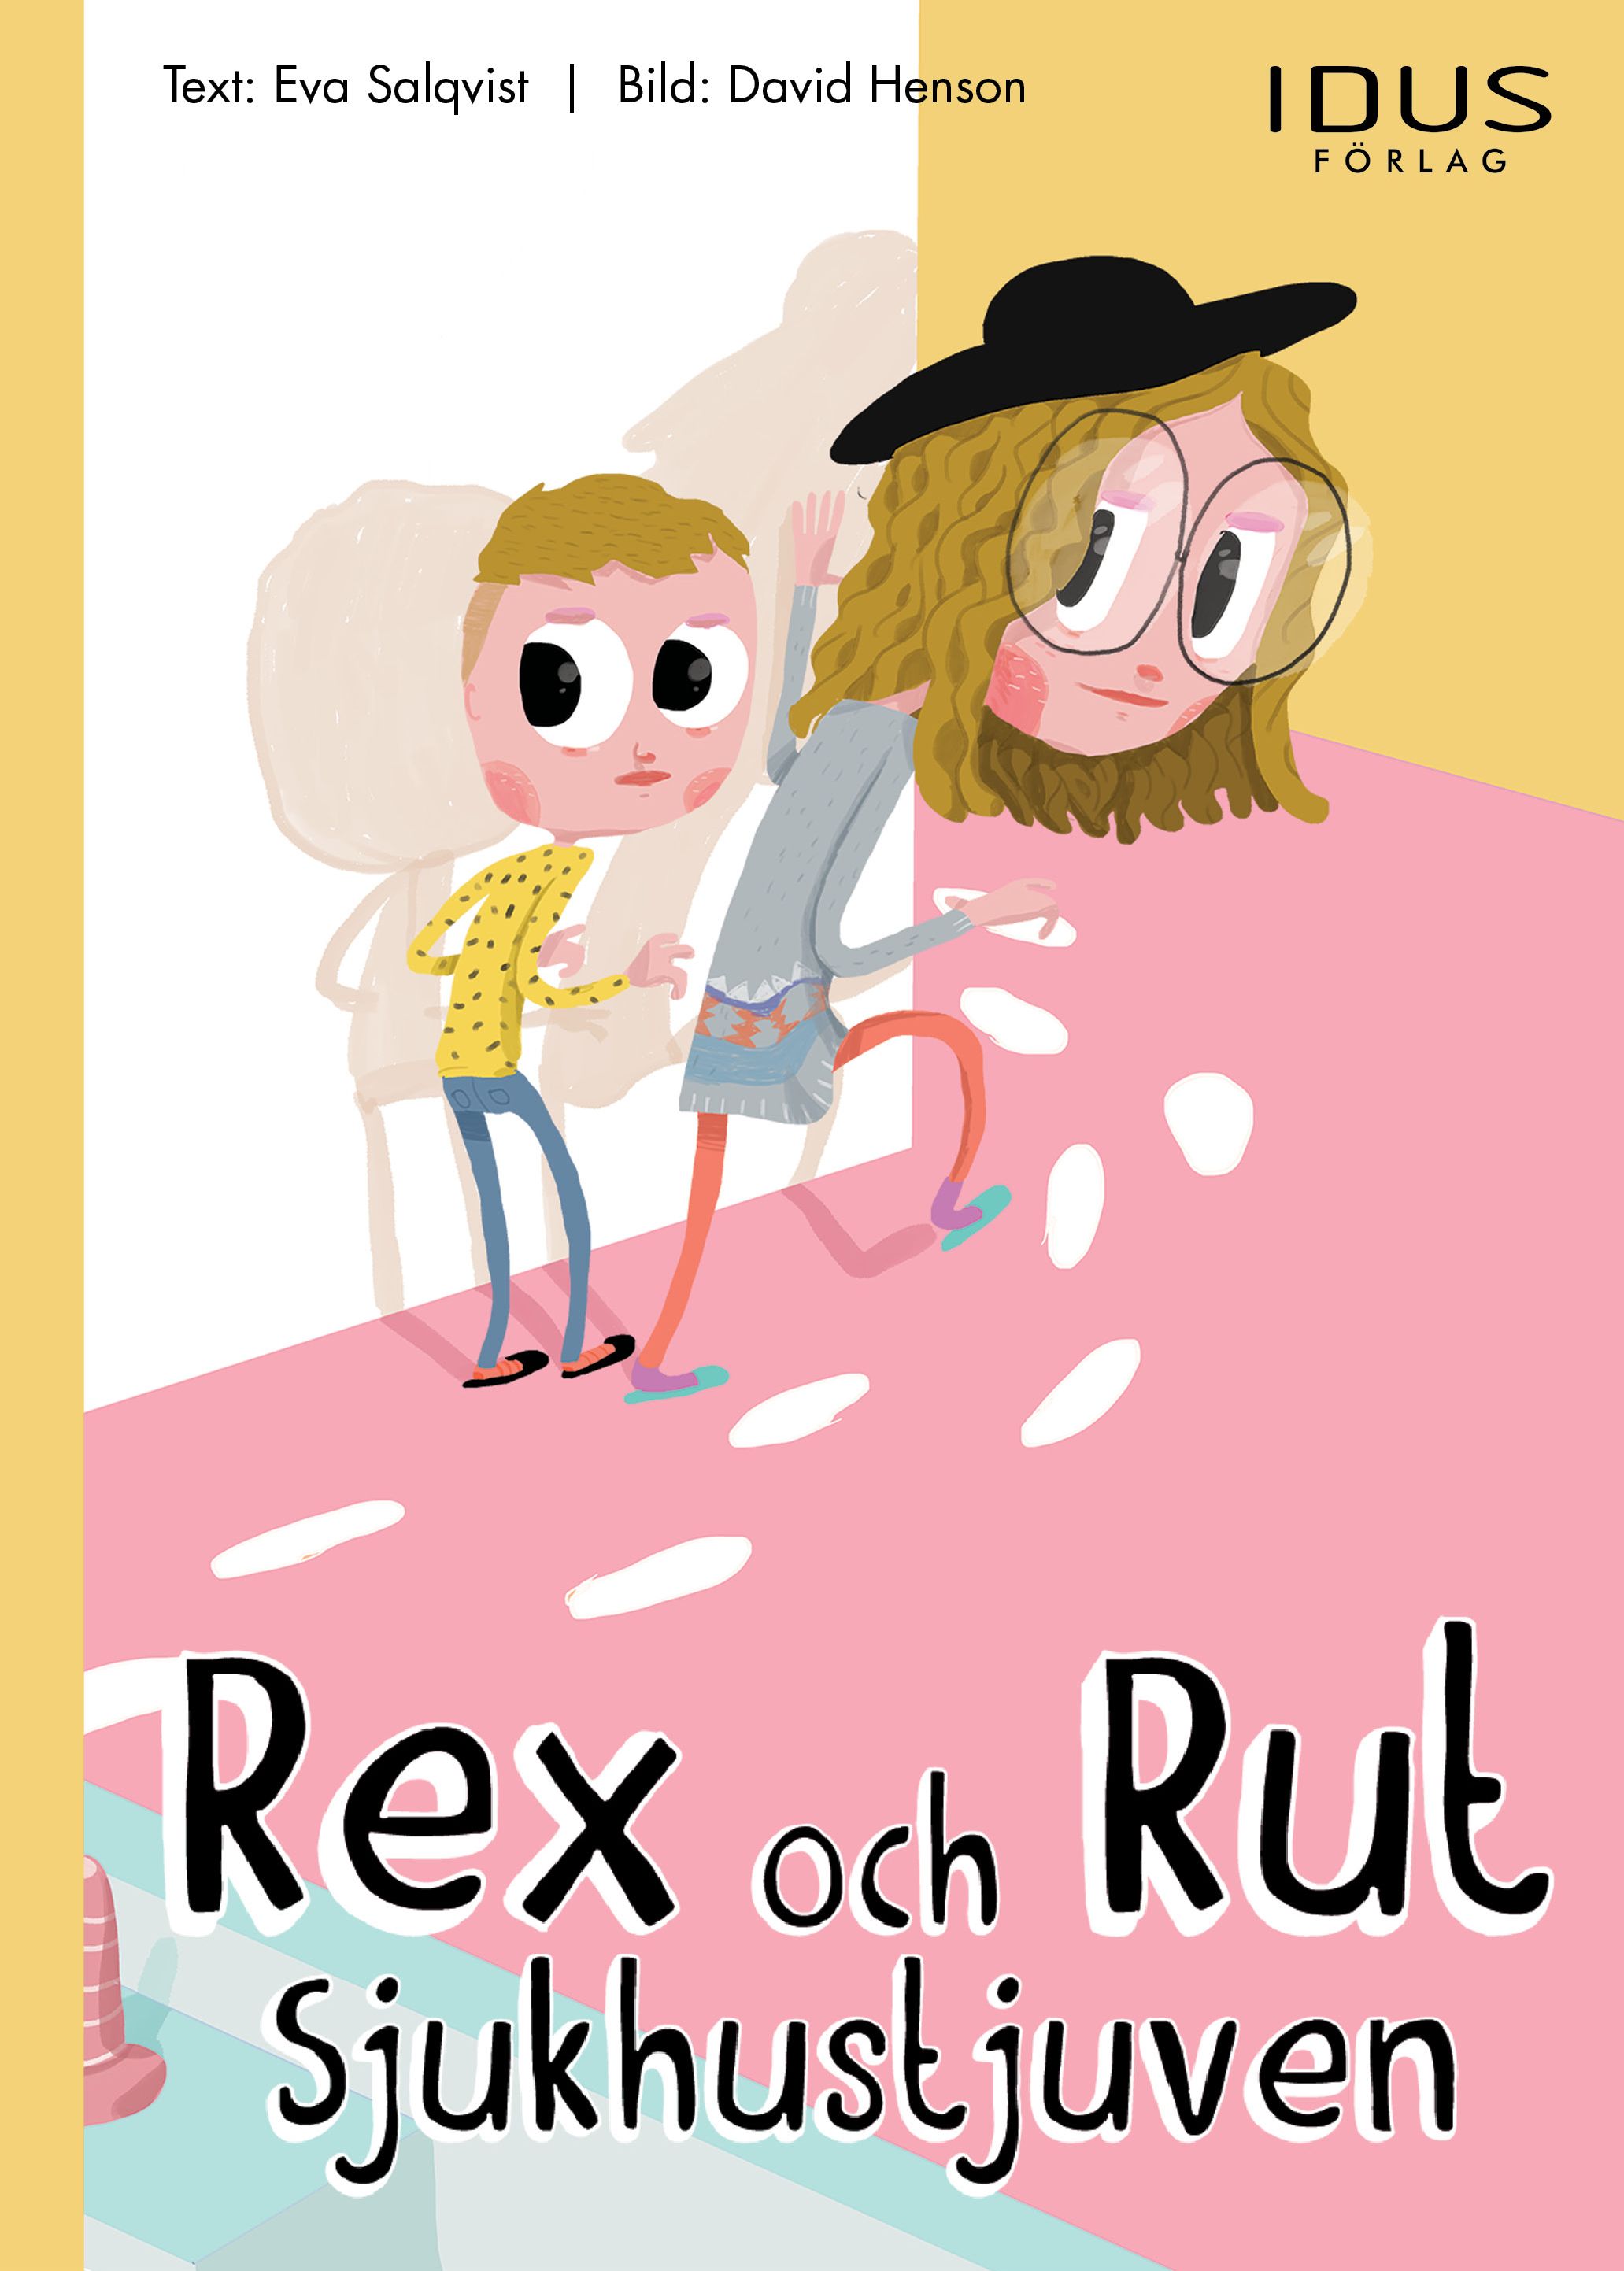 Rex och Rut - Sjukhustjuven, e-bog af Eva Salqvist